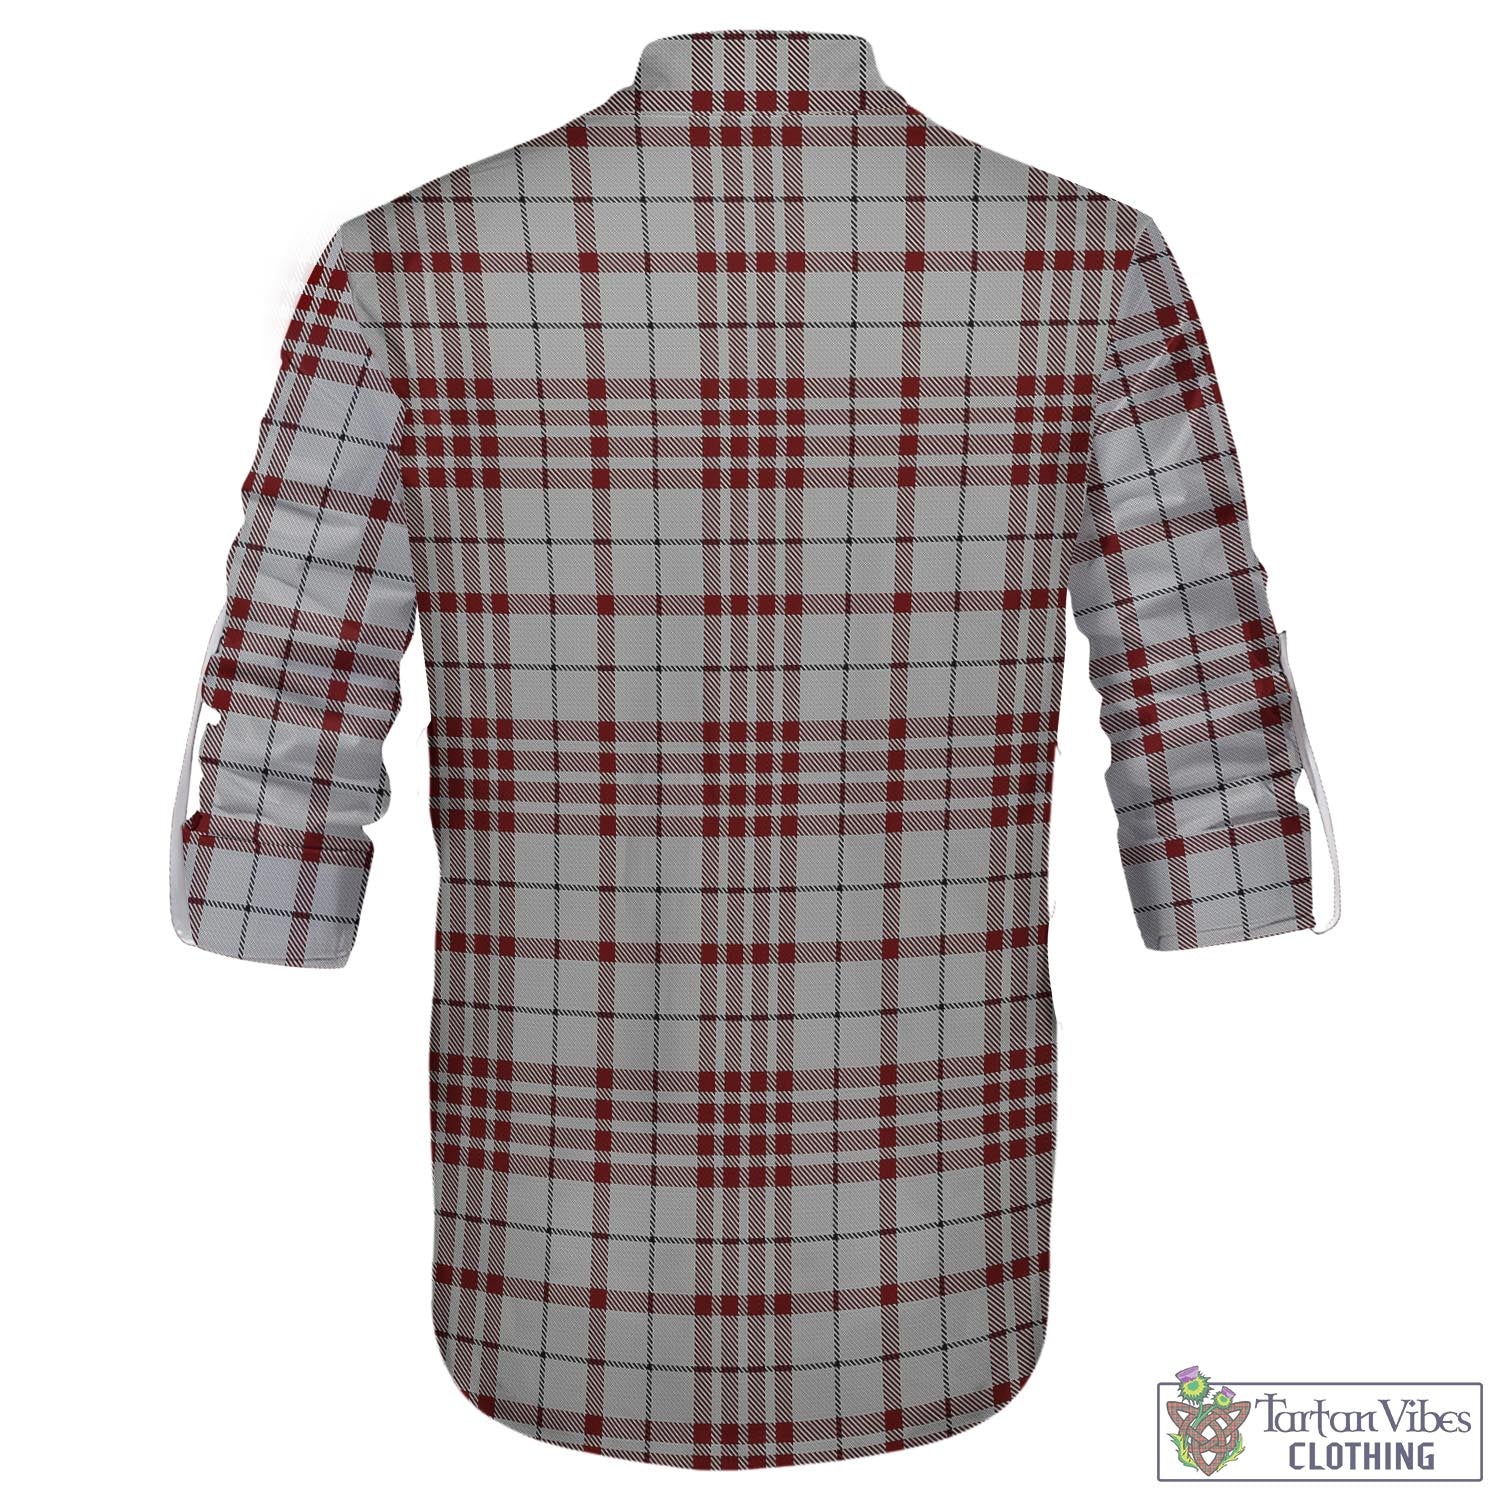 Tartan Vibes Clothing Clayton Tartan Men's Scottish Traditional Jacobite Ghillie Kilt Shirt